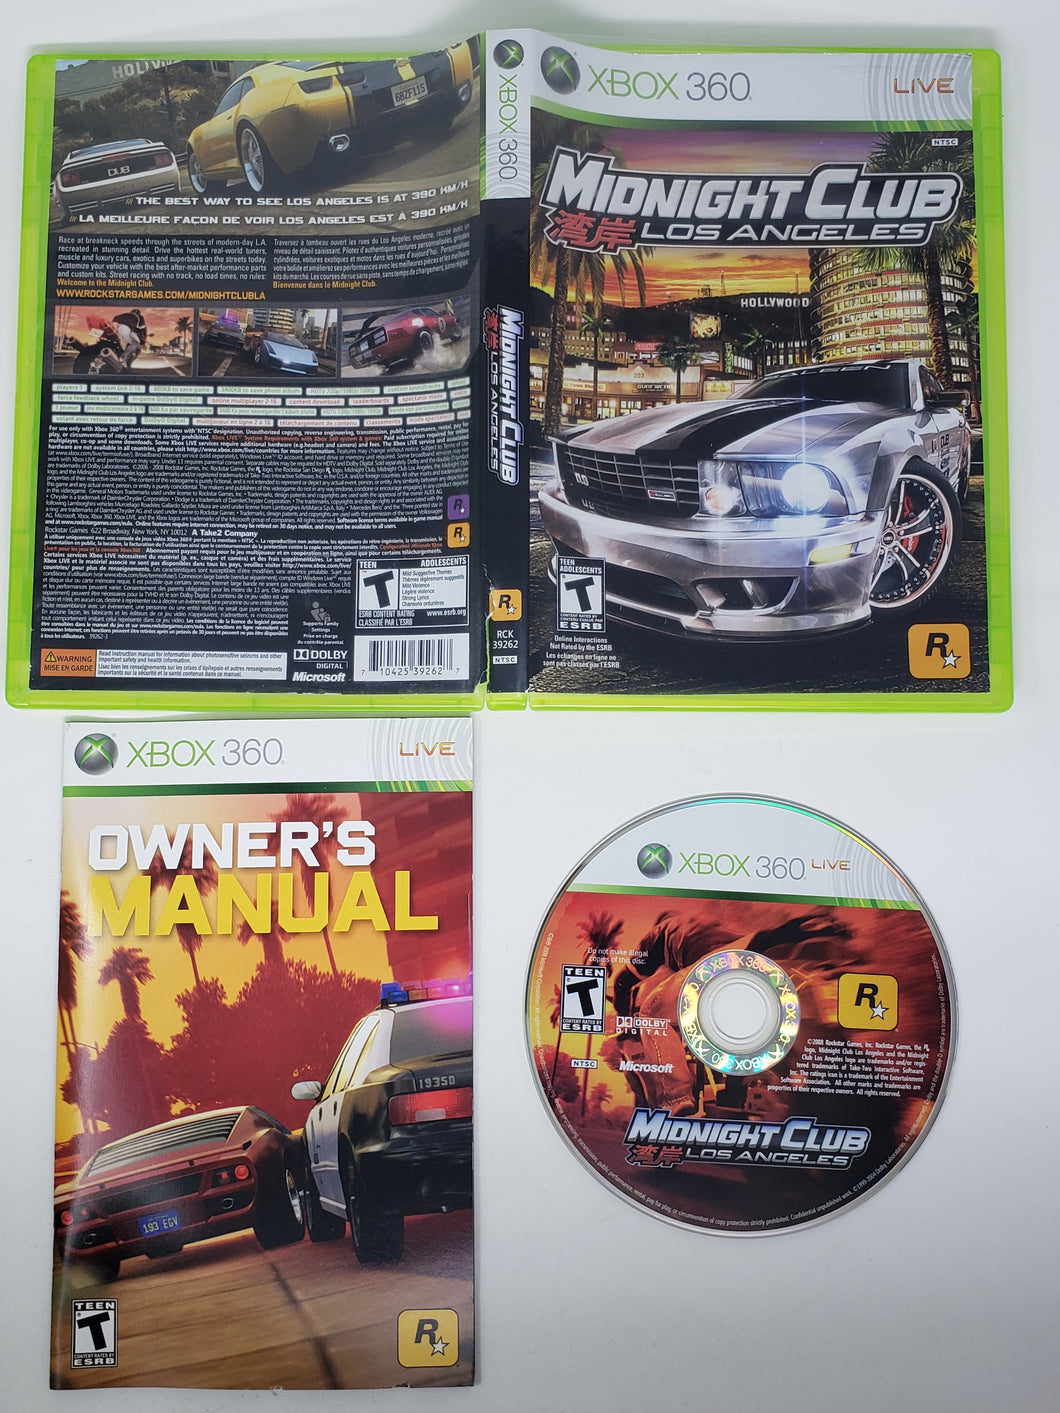 Midnight Club Los Angeles - Microsoft Xbox 360